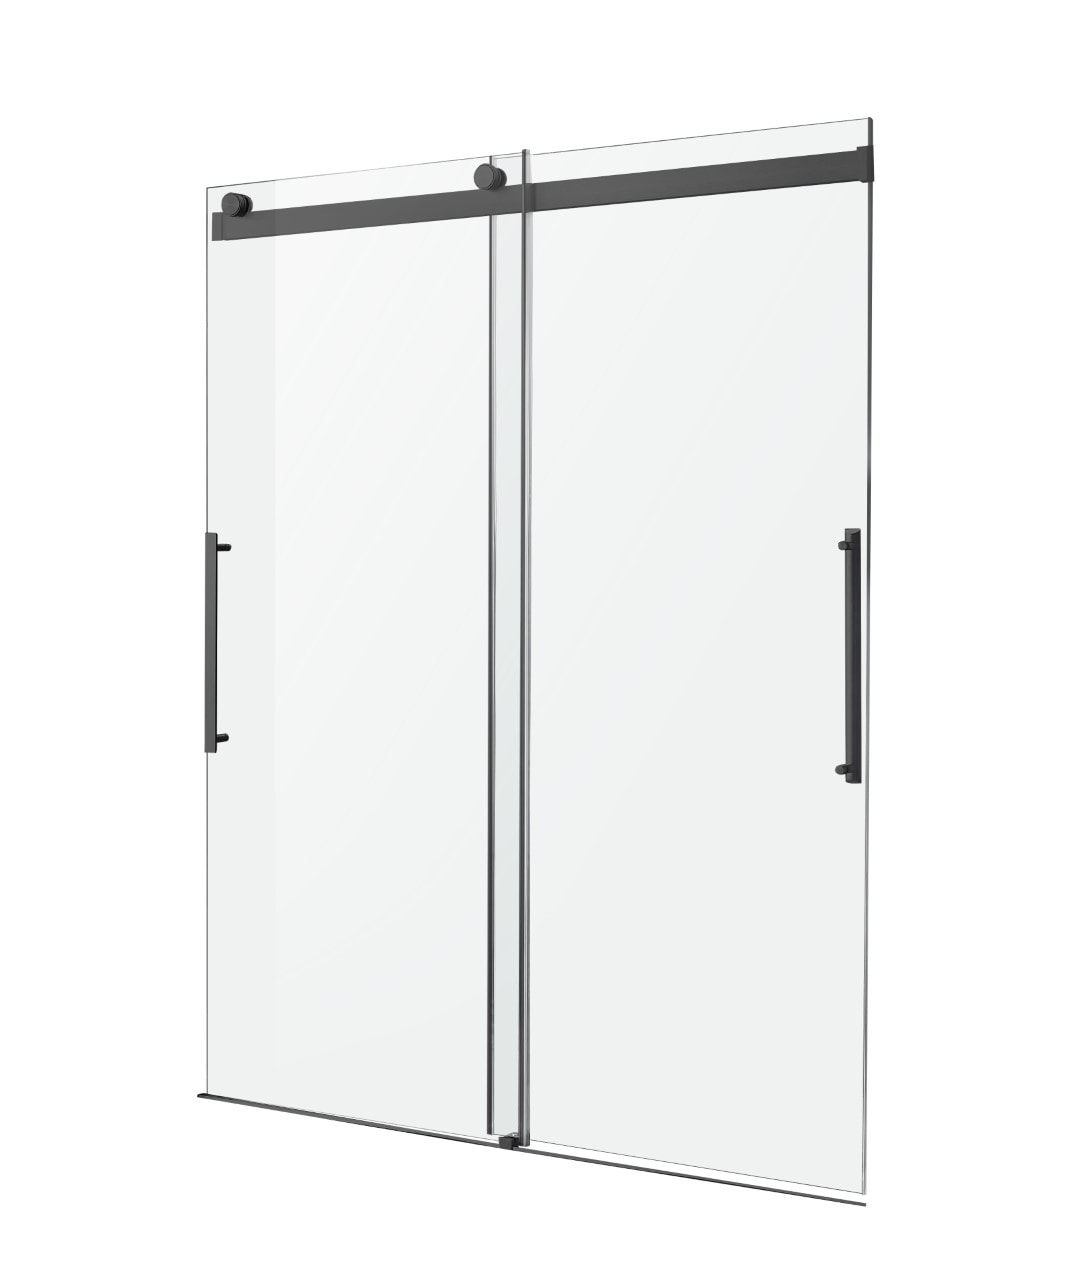 Ivanees Single Sliding Frameless Shower Door 8mm Clear Tempered Glass - Barn Door Style, 48 x 76 inch / Black